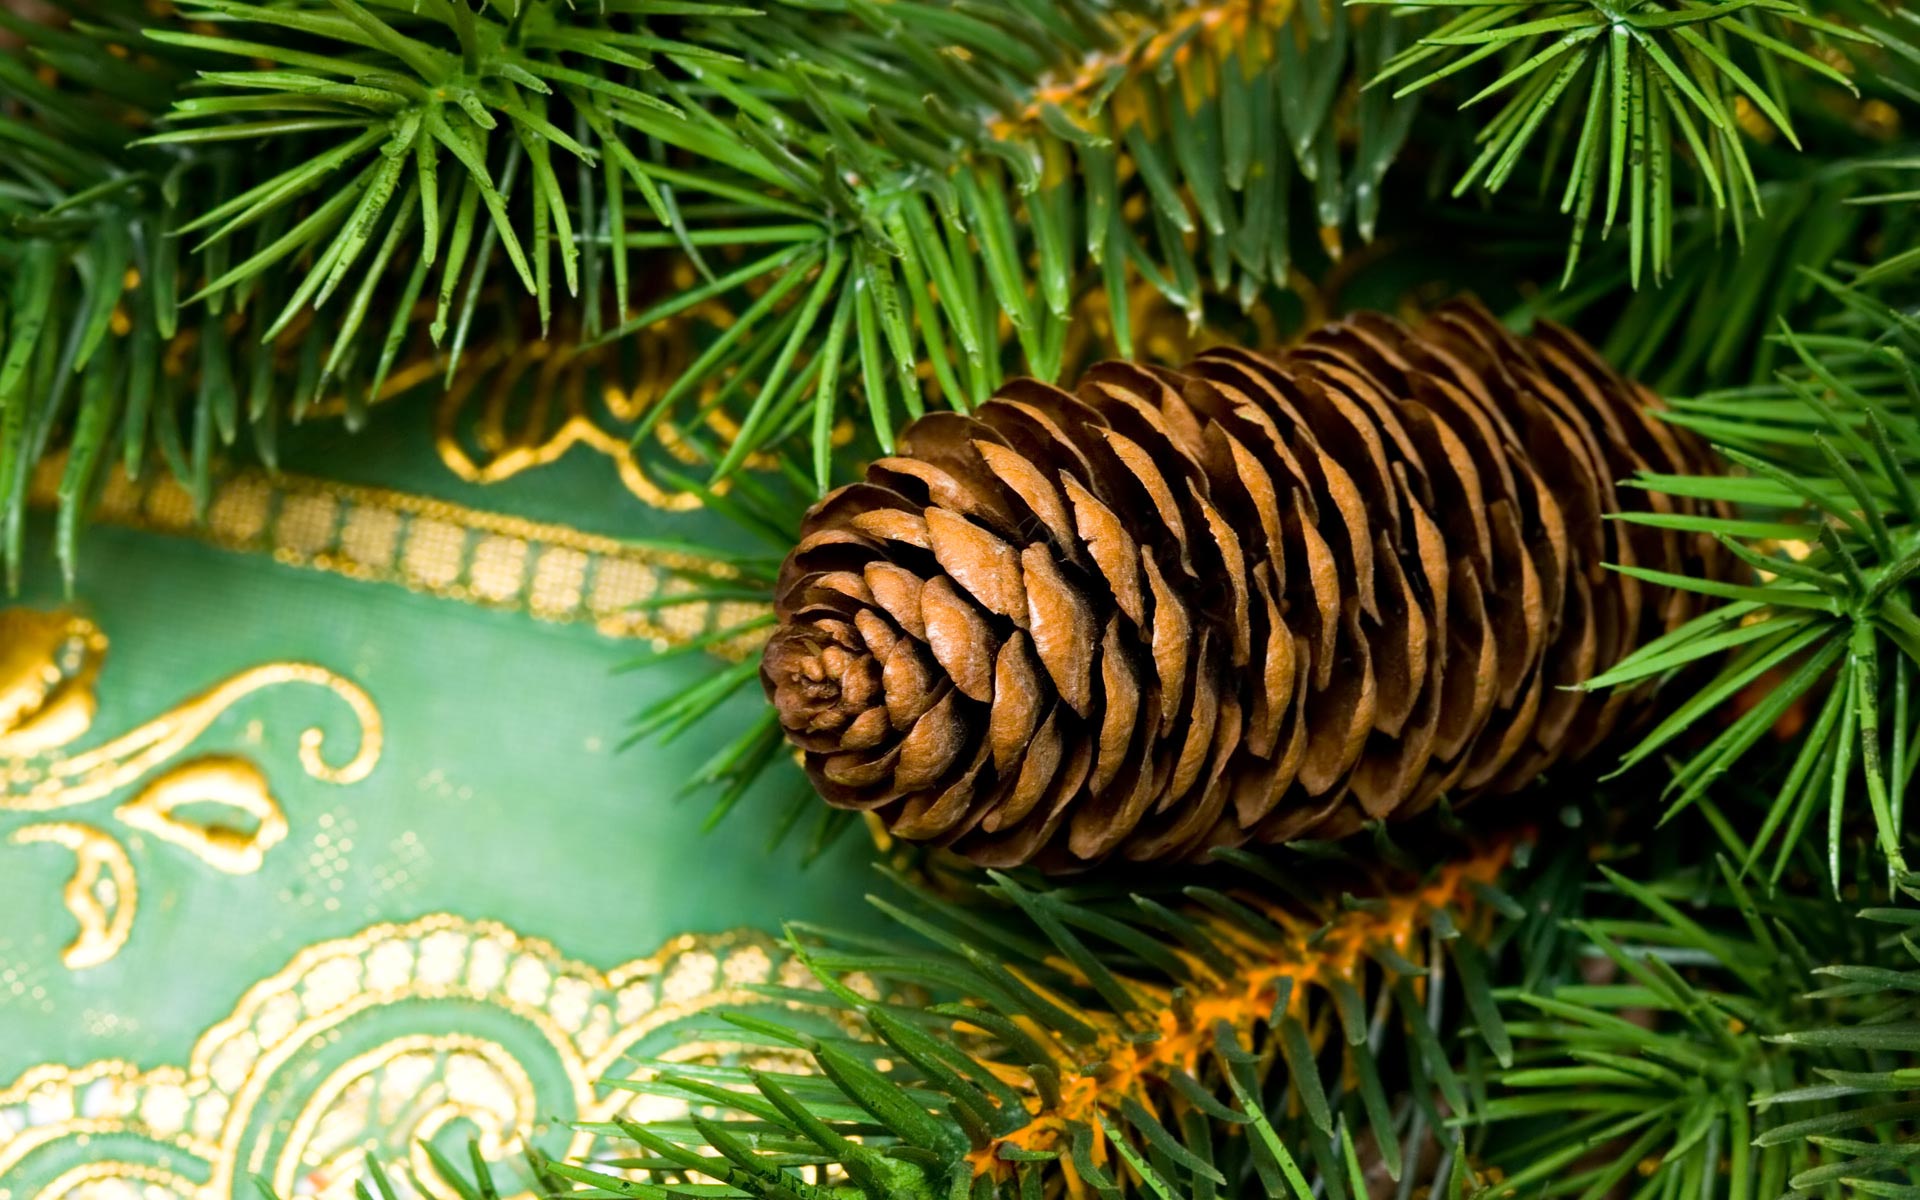 Desktop backgrounds · Backgrounds · Holiday Christmas pine